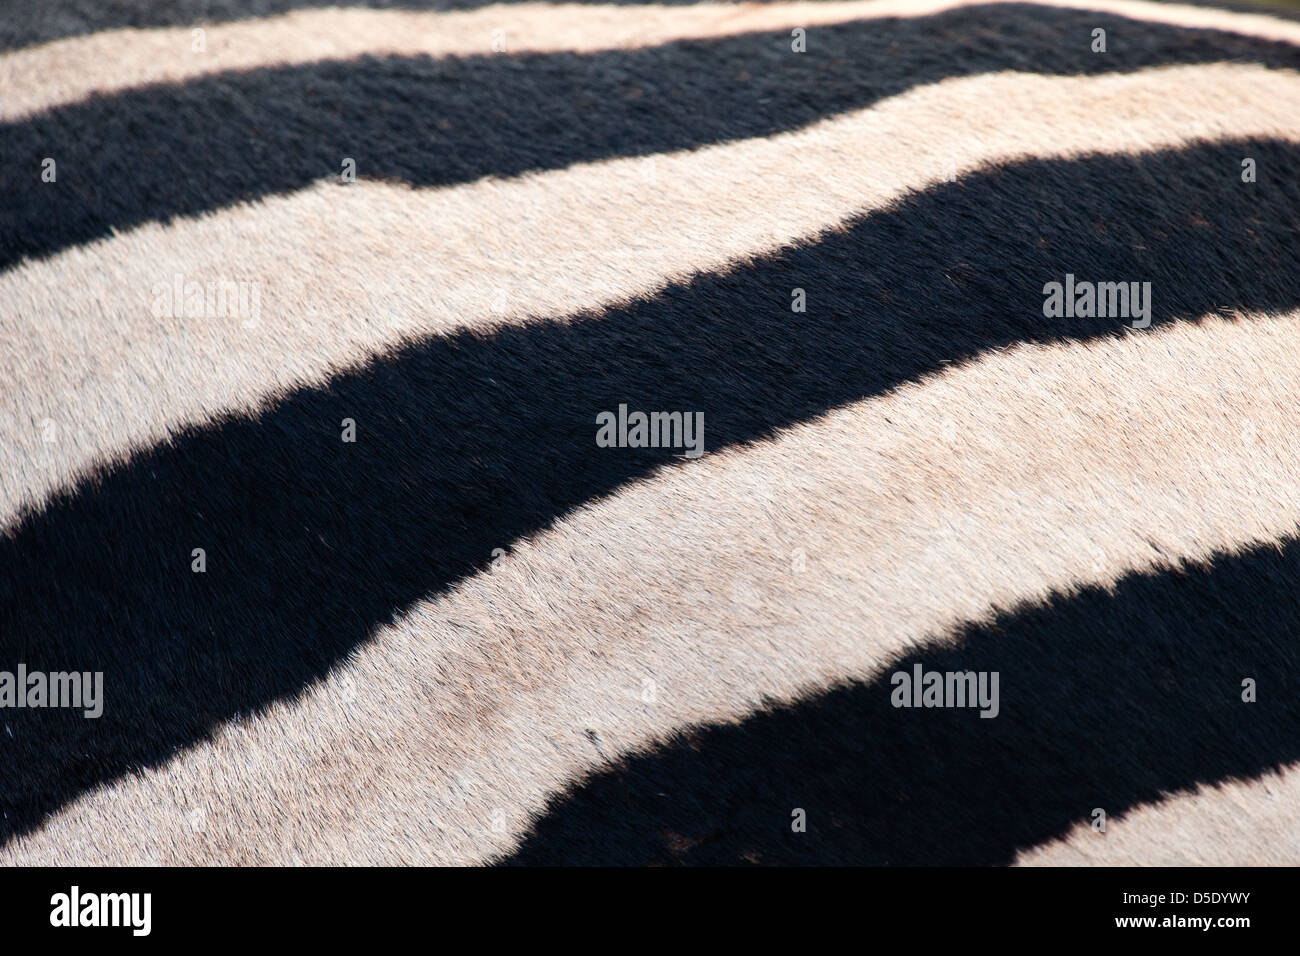 Detail of the skin of a Common , Plains or Burchell's Zebra (Equus quagga burchellii) Stock Photo